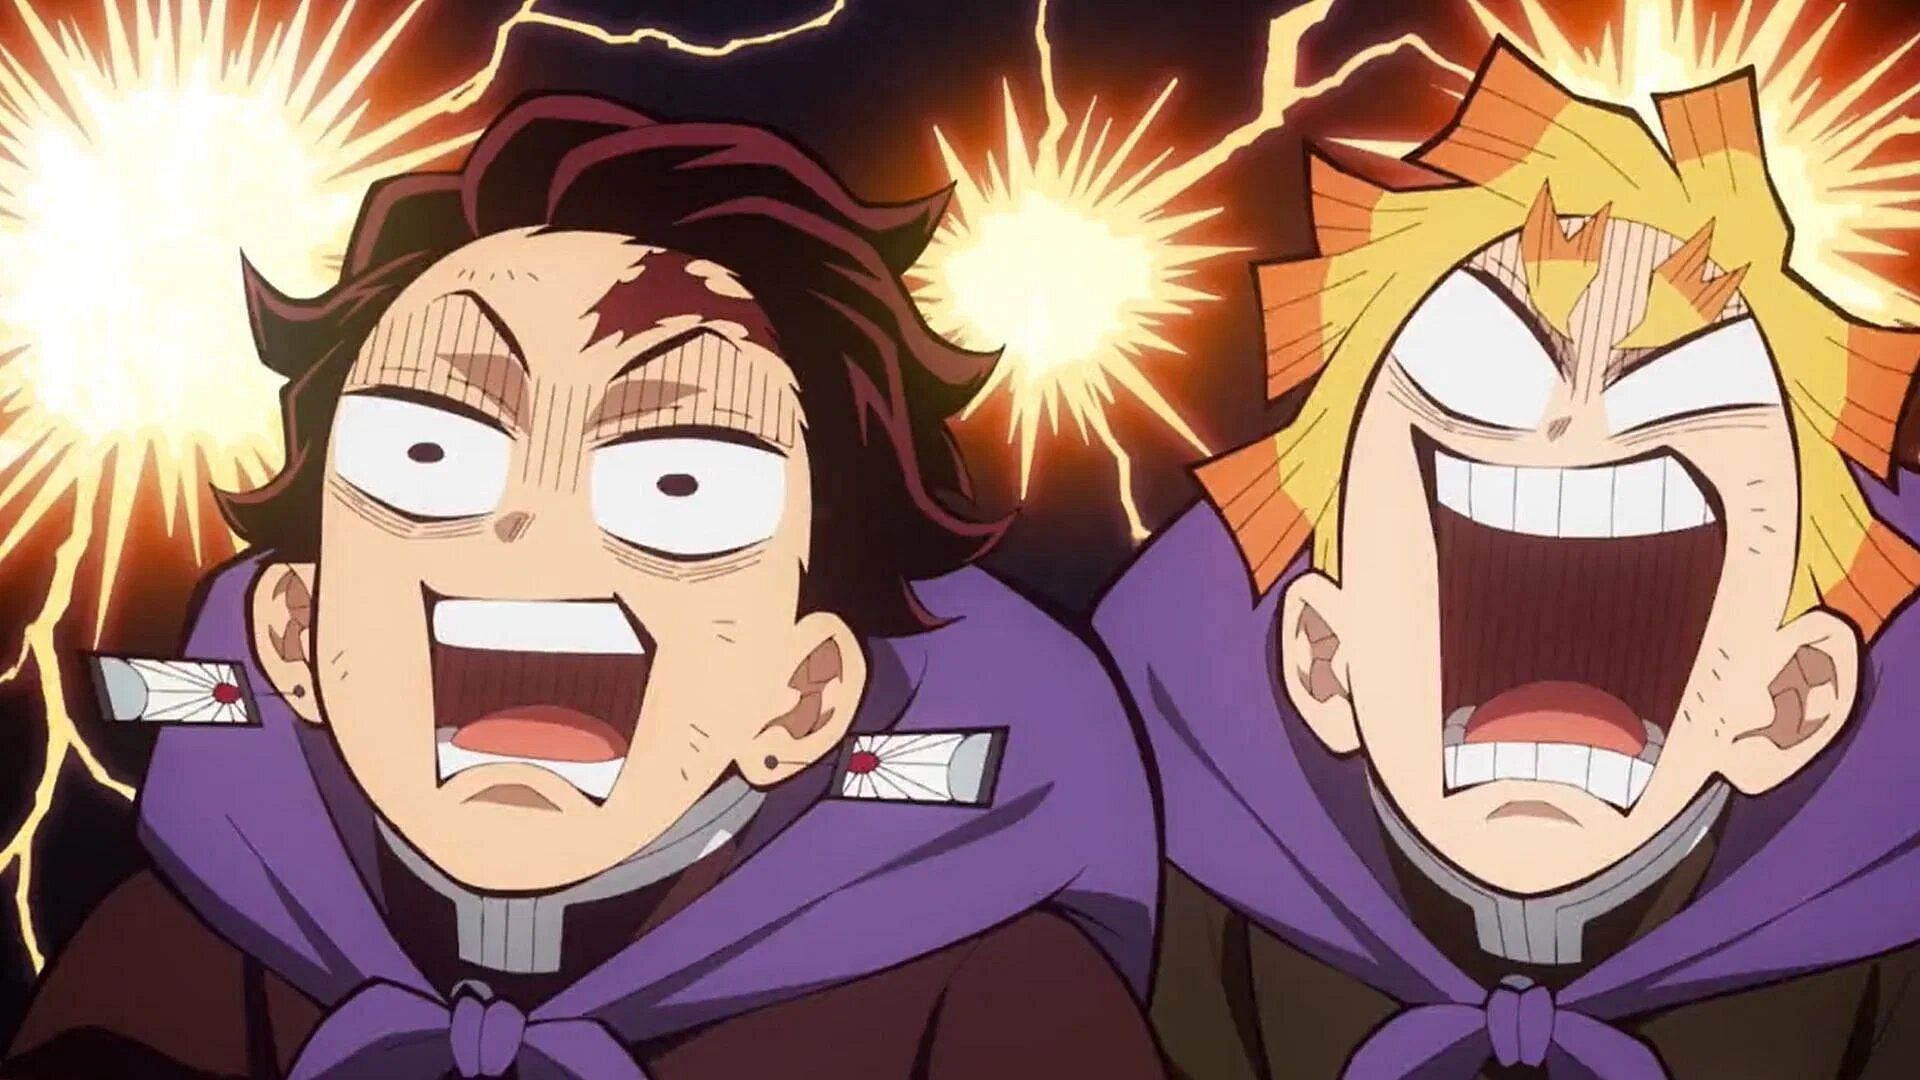 Tanjiro and Zenitsu in the fourth season of the anime (Image via Ufotable).